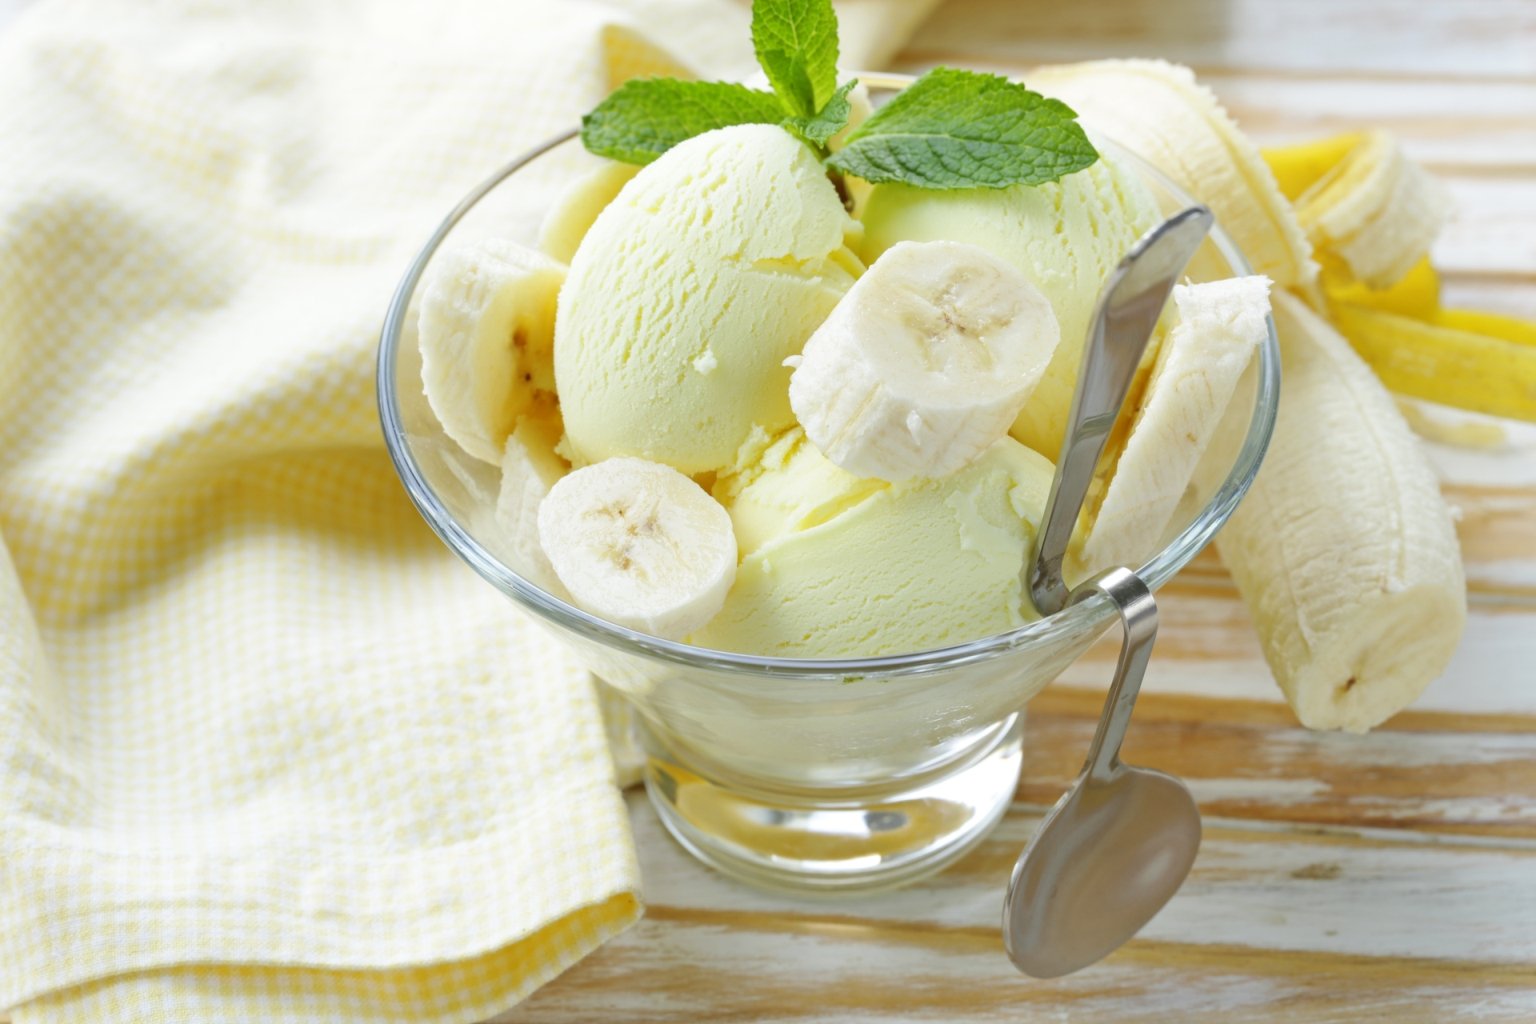 Банановое мороженое молоко. Веганское банановое мороженое. Мороженое из банана. Банановое мороженое домашнее. Мороженое с творогом.